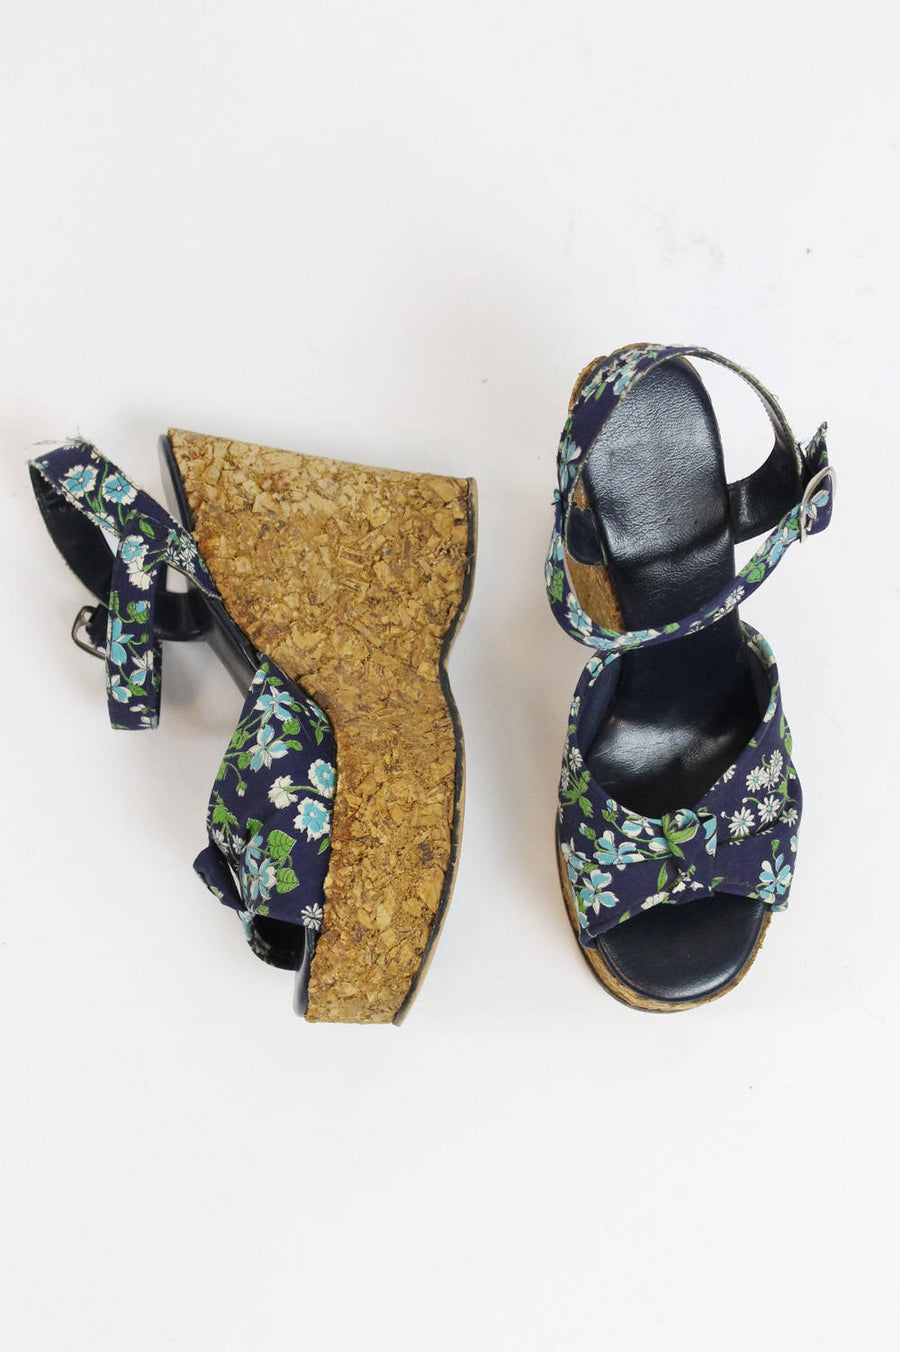 1970s cork sandals shoes size 5.5 us | vintage floral peep toe wedges platforms